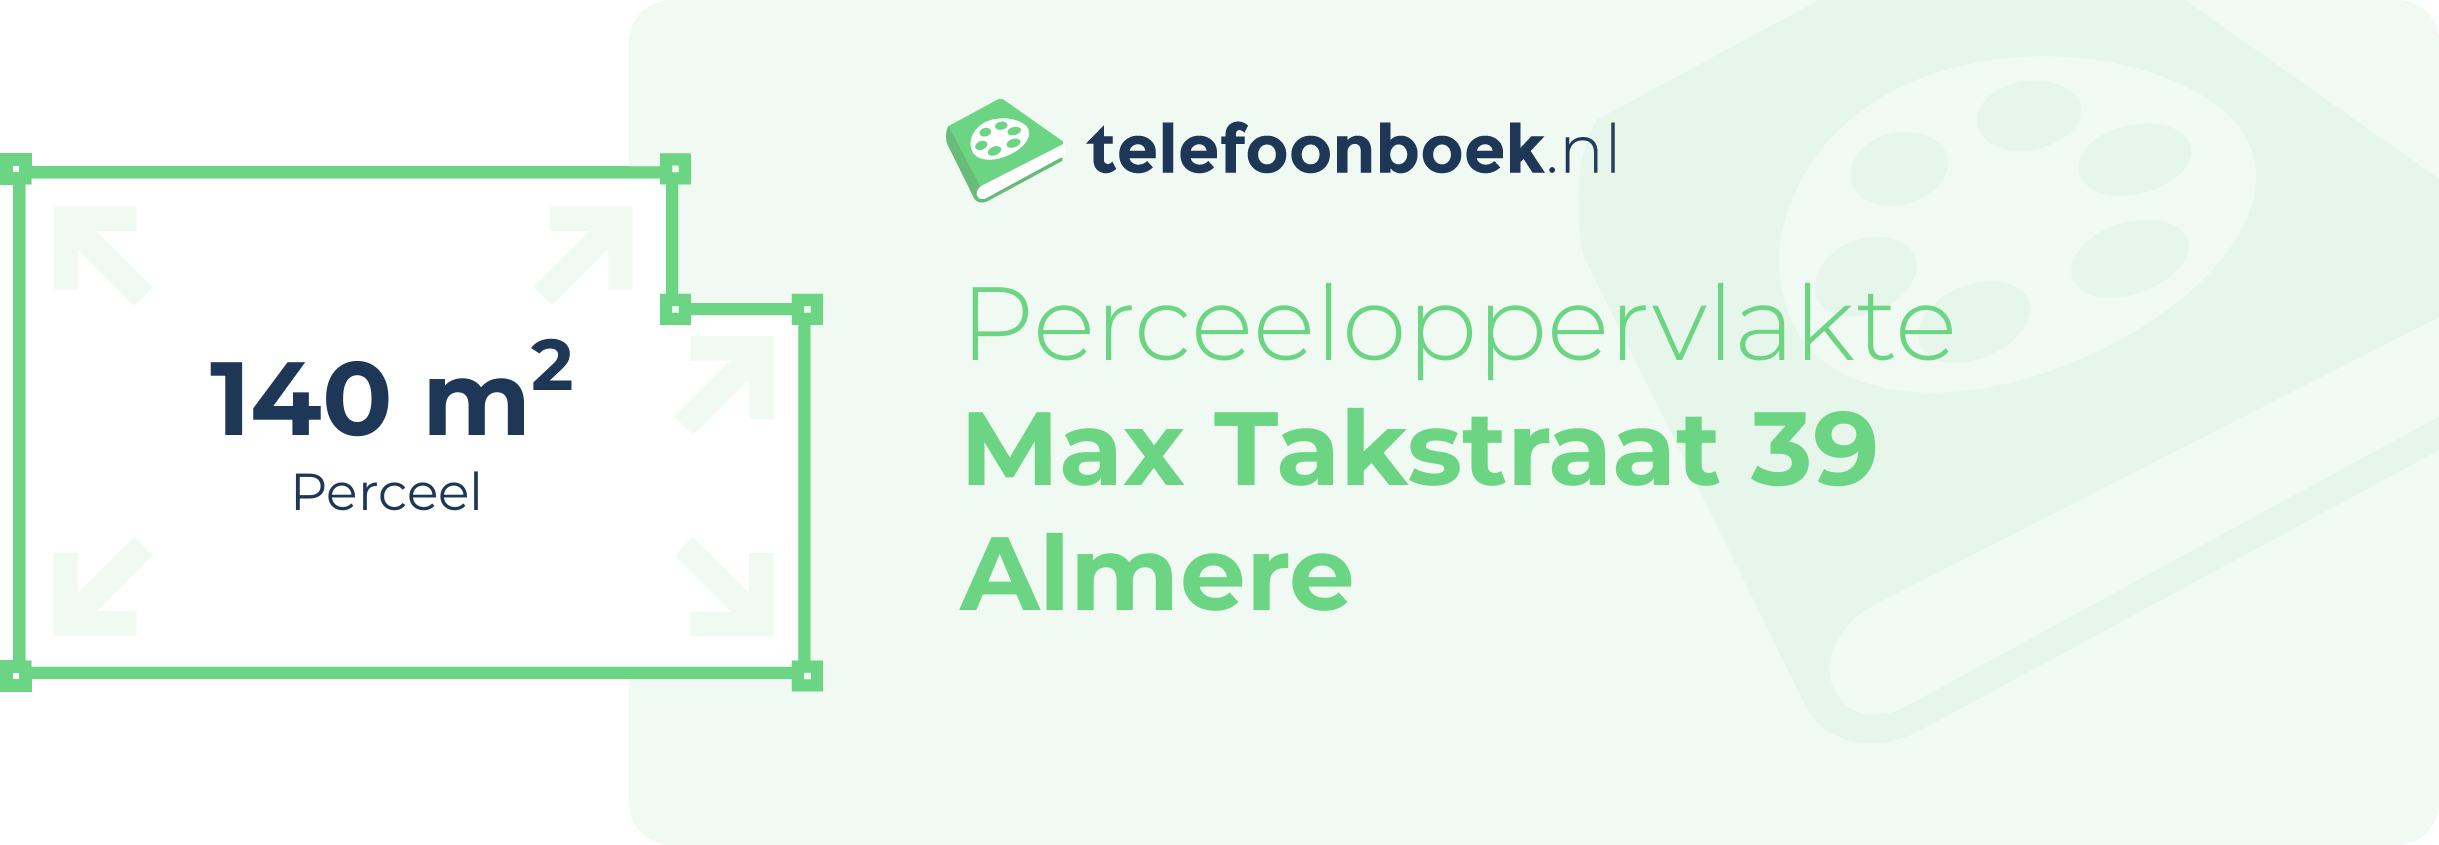 Perceeloppervlakte Max Takstraat 39 Almere